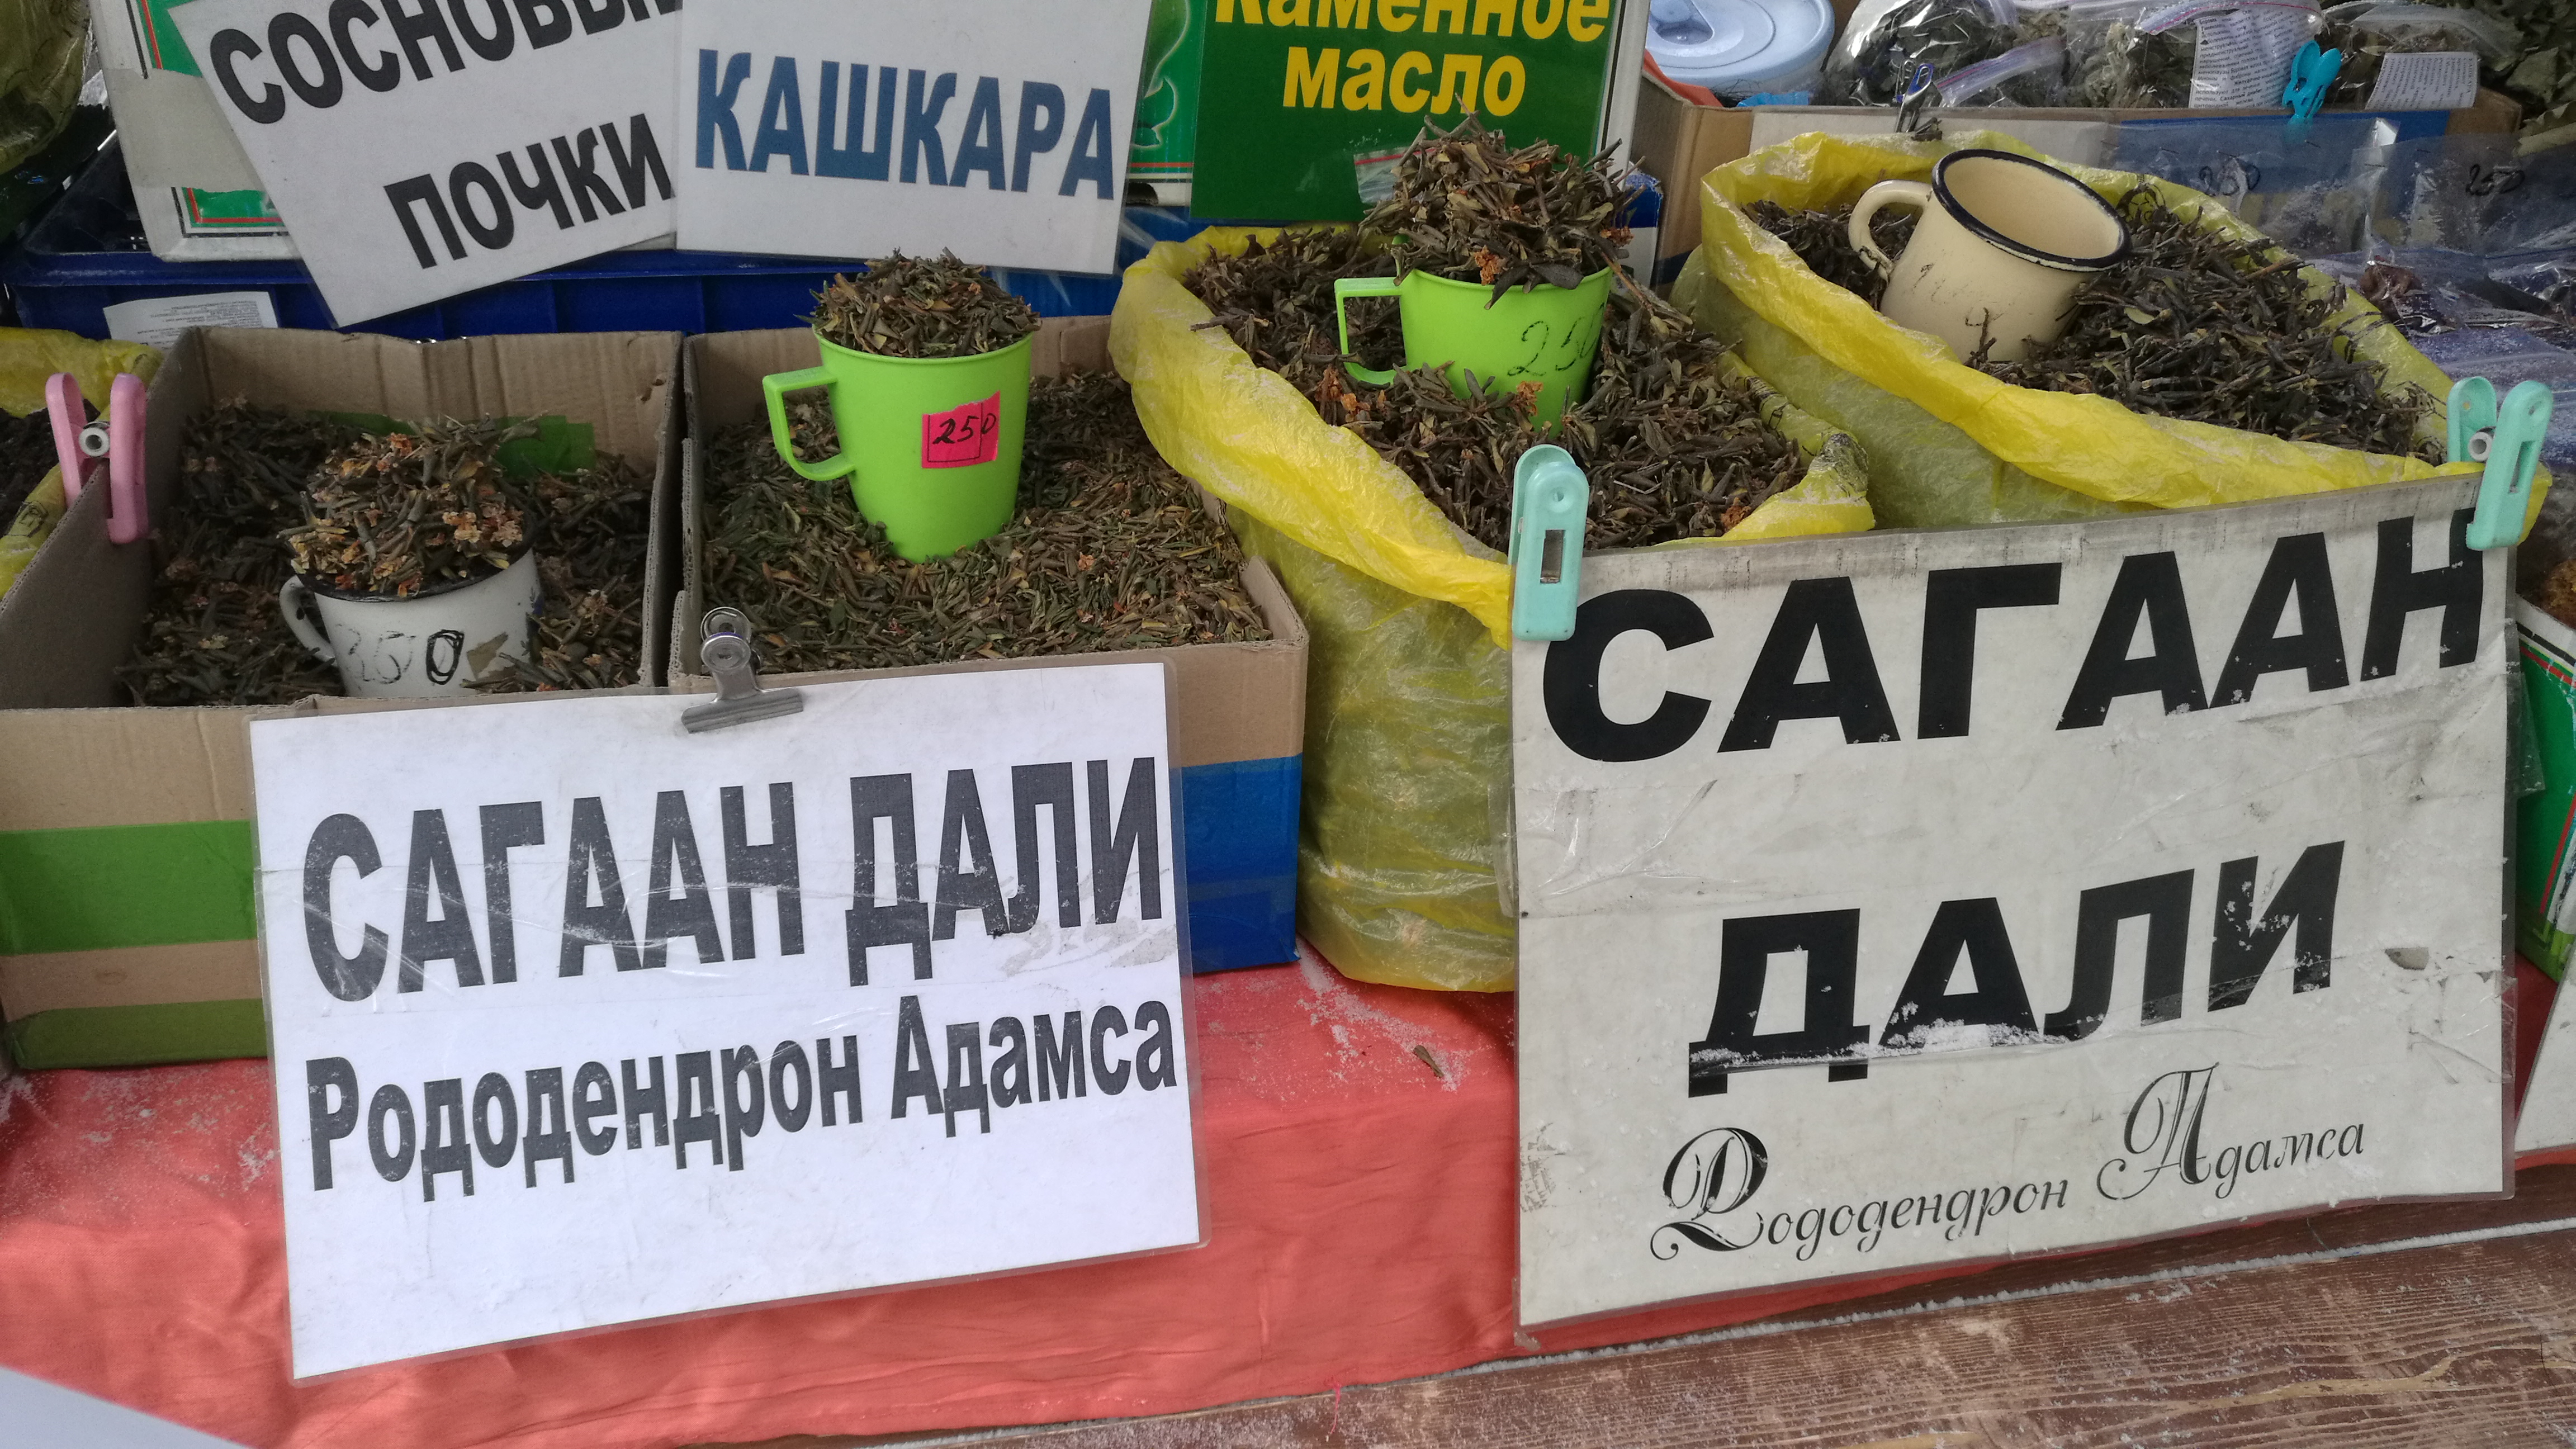 Sagan Dayla at a market in Irkutsk, Russia.